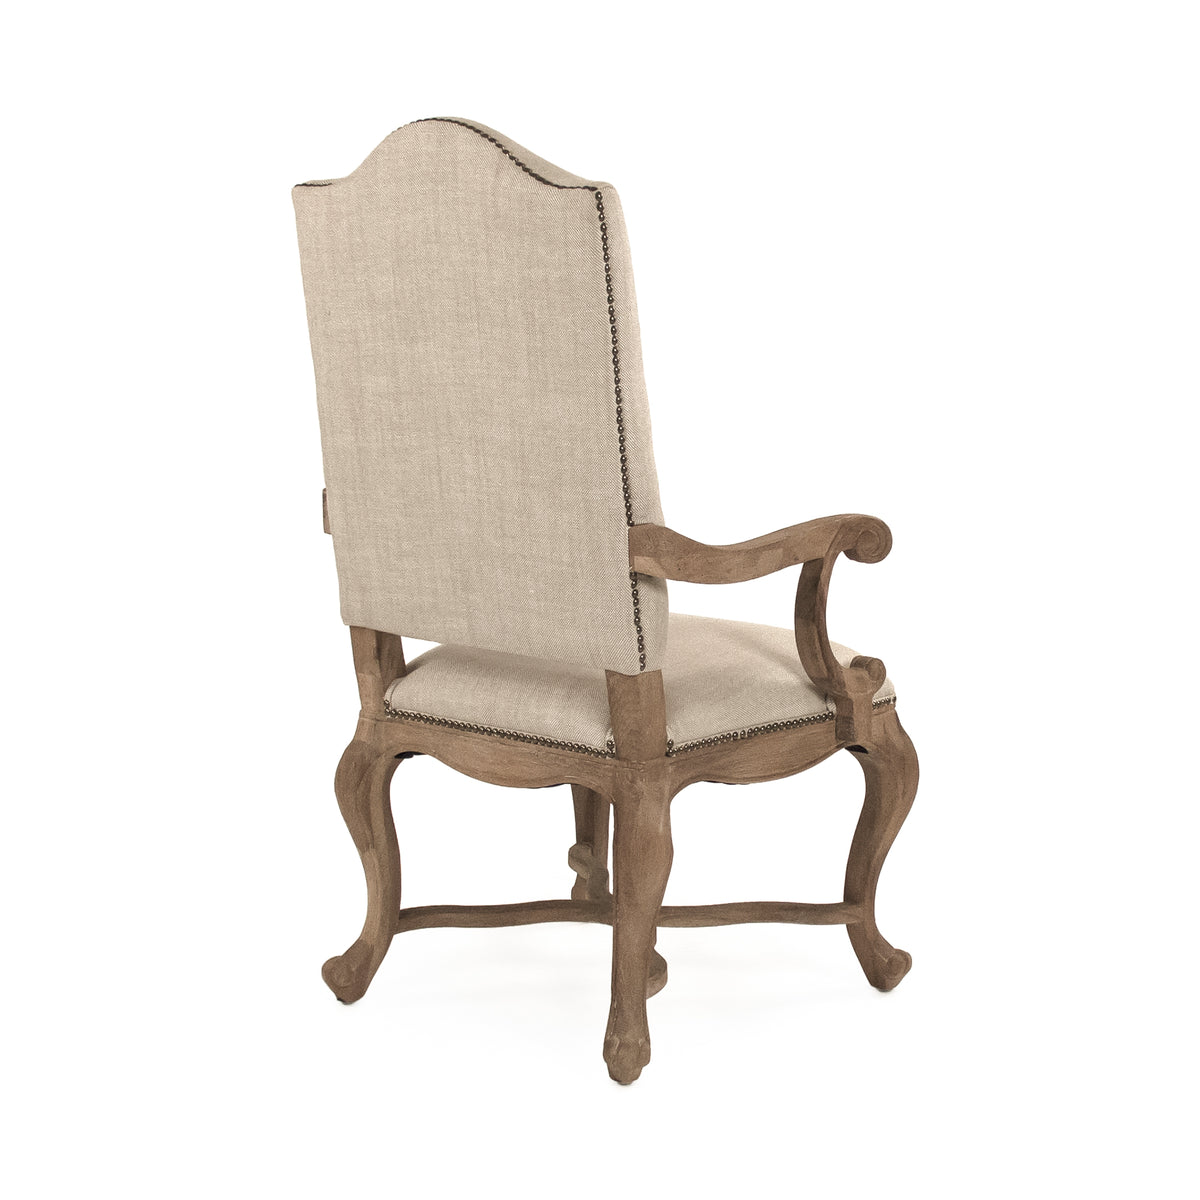 Grayson Arm Chair by Zentique